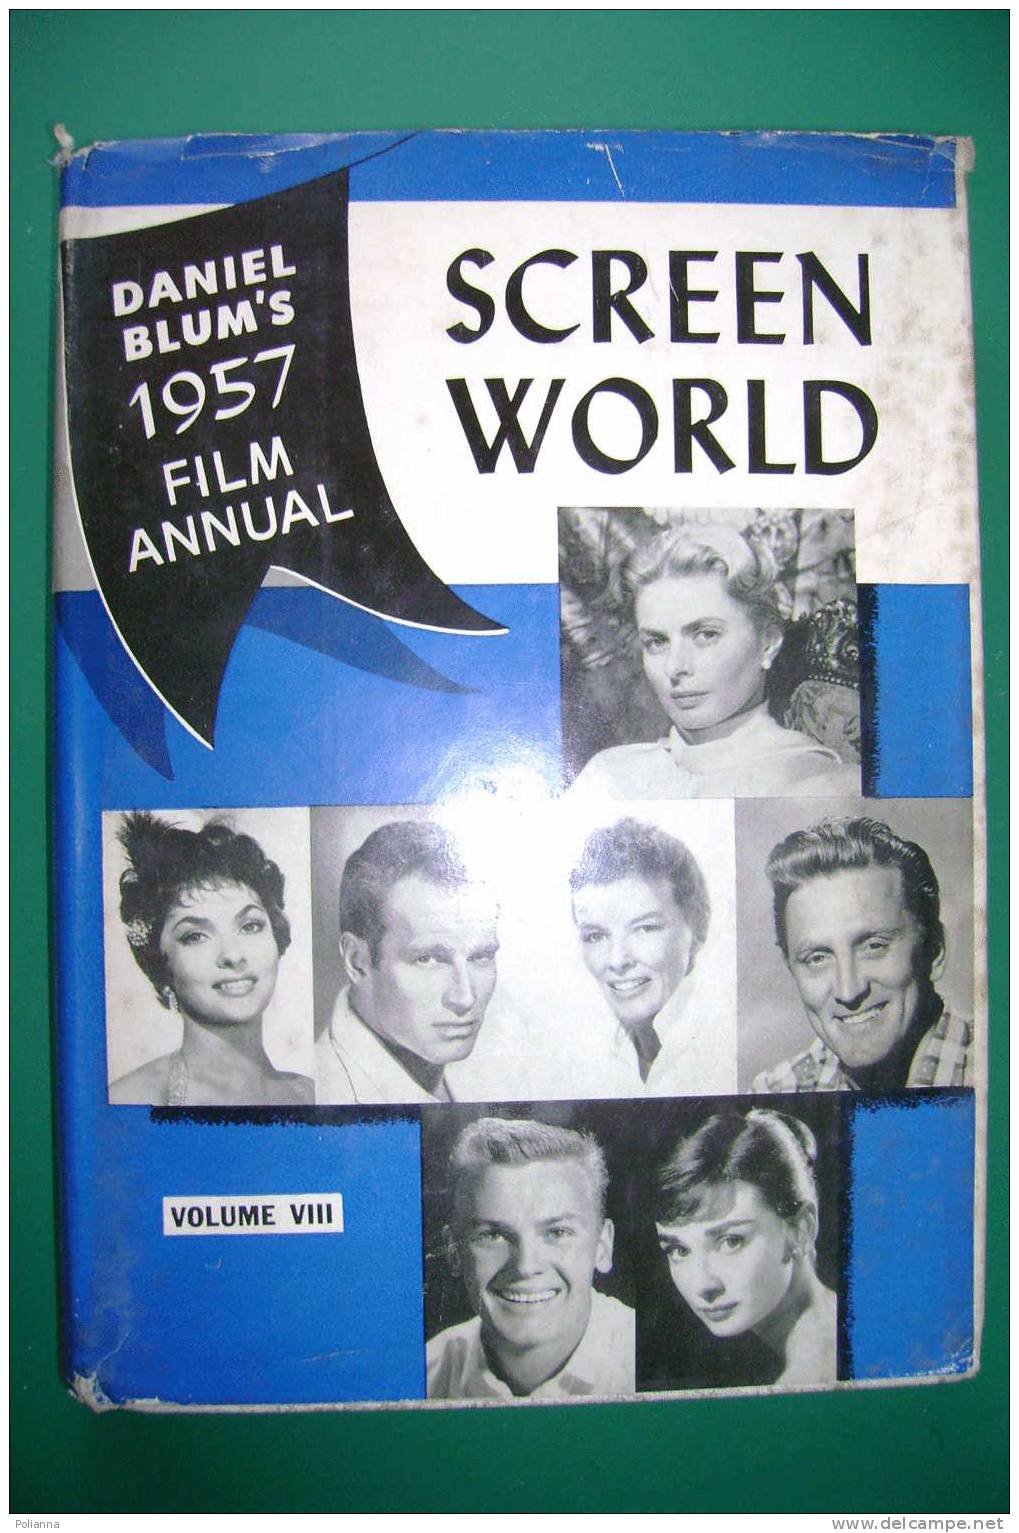 PDI/7 Daniel Blum's 1957 FILM ANNUAL SCREEN WORLD V.VIII/Ingrid Bergman/Humphrey Bogart/Marylin Monroe/Elvis Presley - Movie